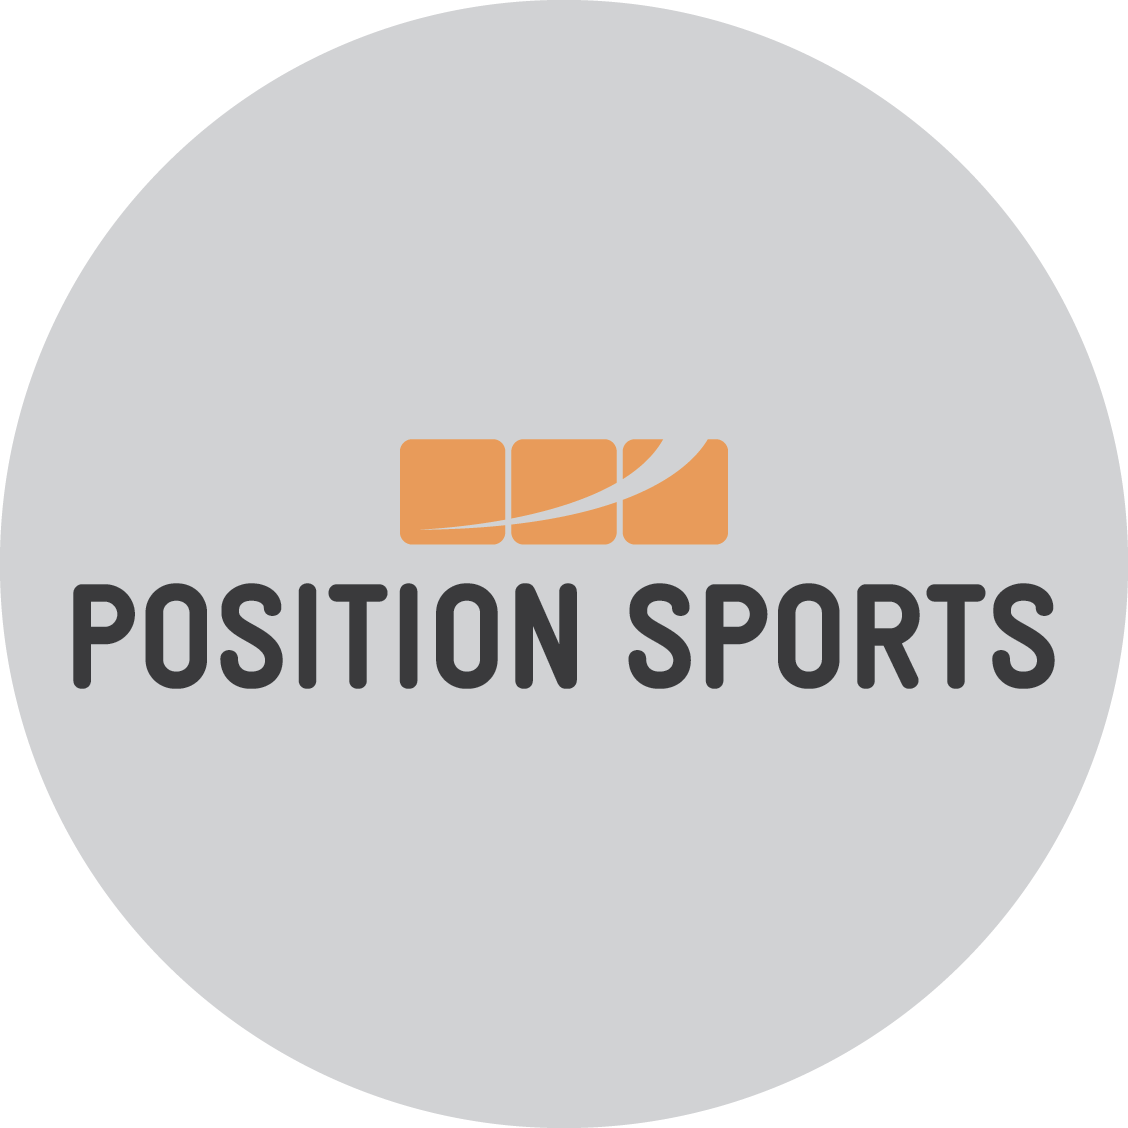 Position Sports logo